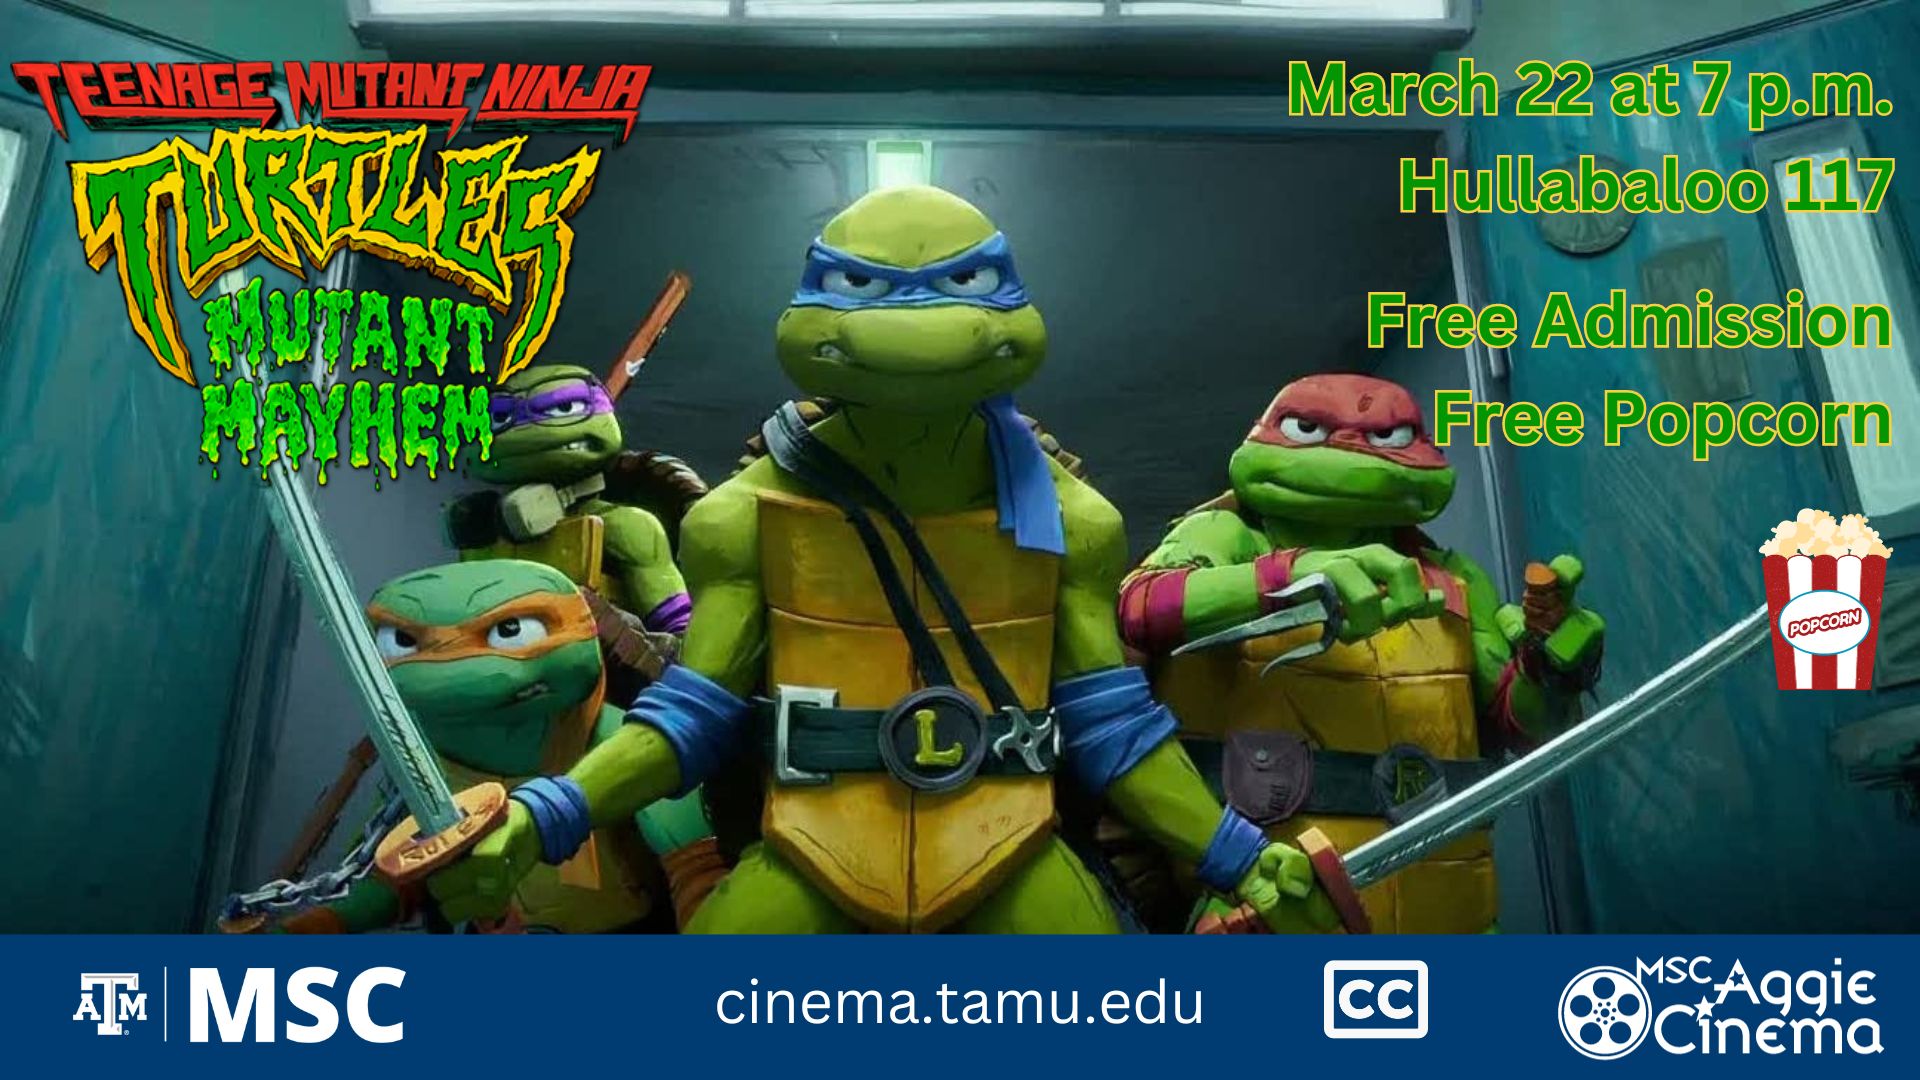 MSC Aggie Cinema presents Teenage Mutant Ninja Turtles, Mutant Mayhem, March 22 at 7 p.m. at Hullabaloo 117, Free Admission, Free Popcorn website: cinema.tamu.edu